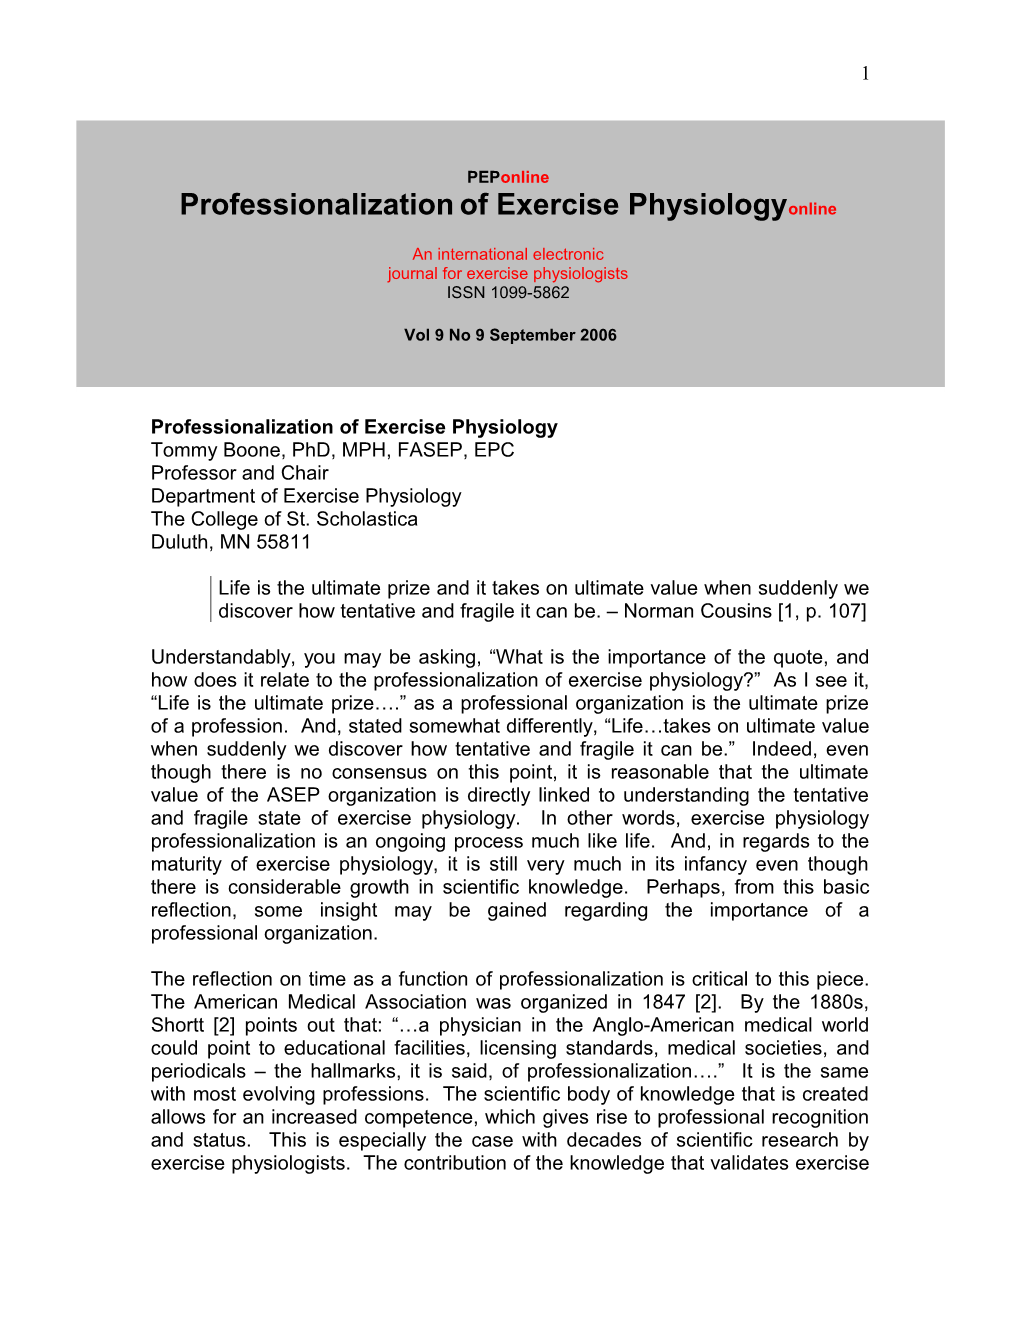 Professionalization of Exercise Physiology